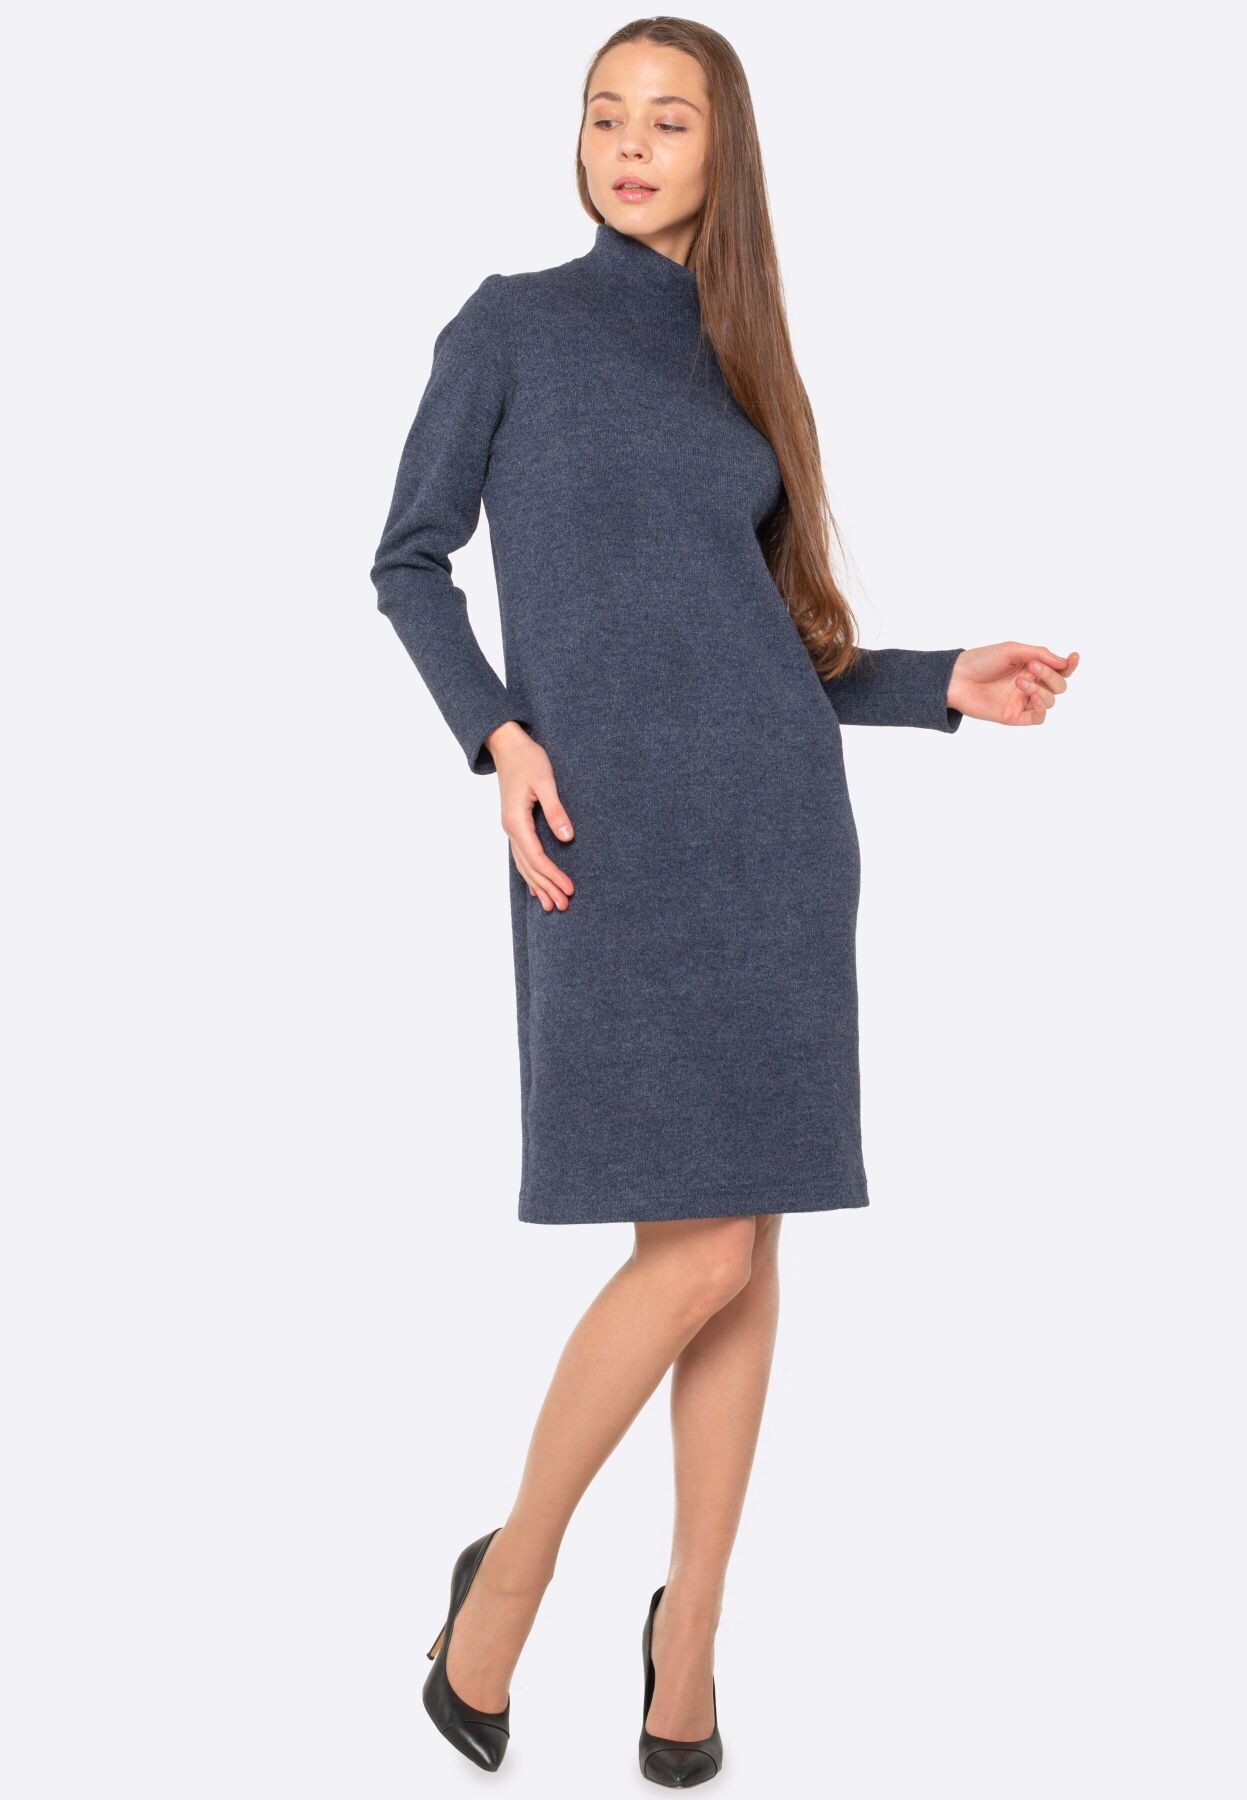 Warm blue-gray sweater dress 5672